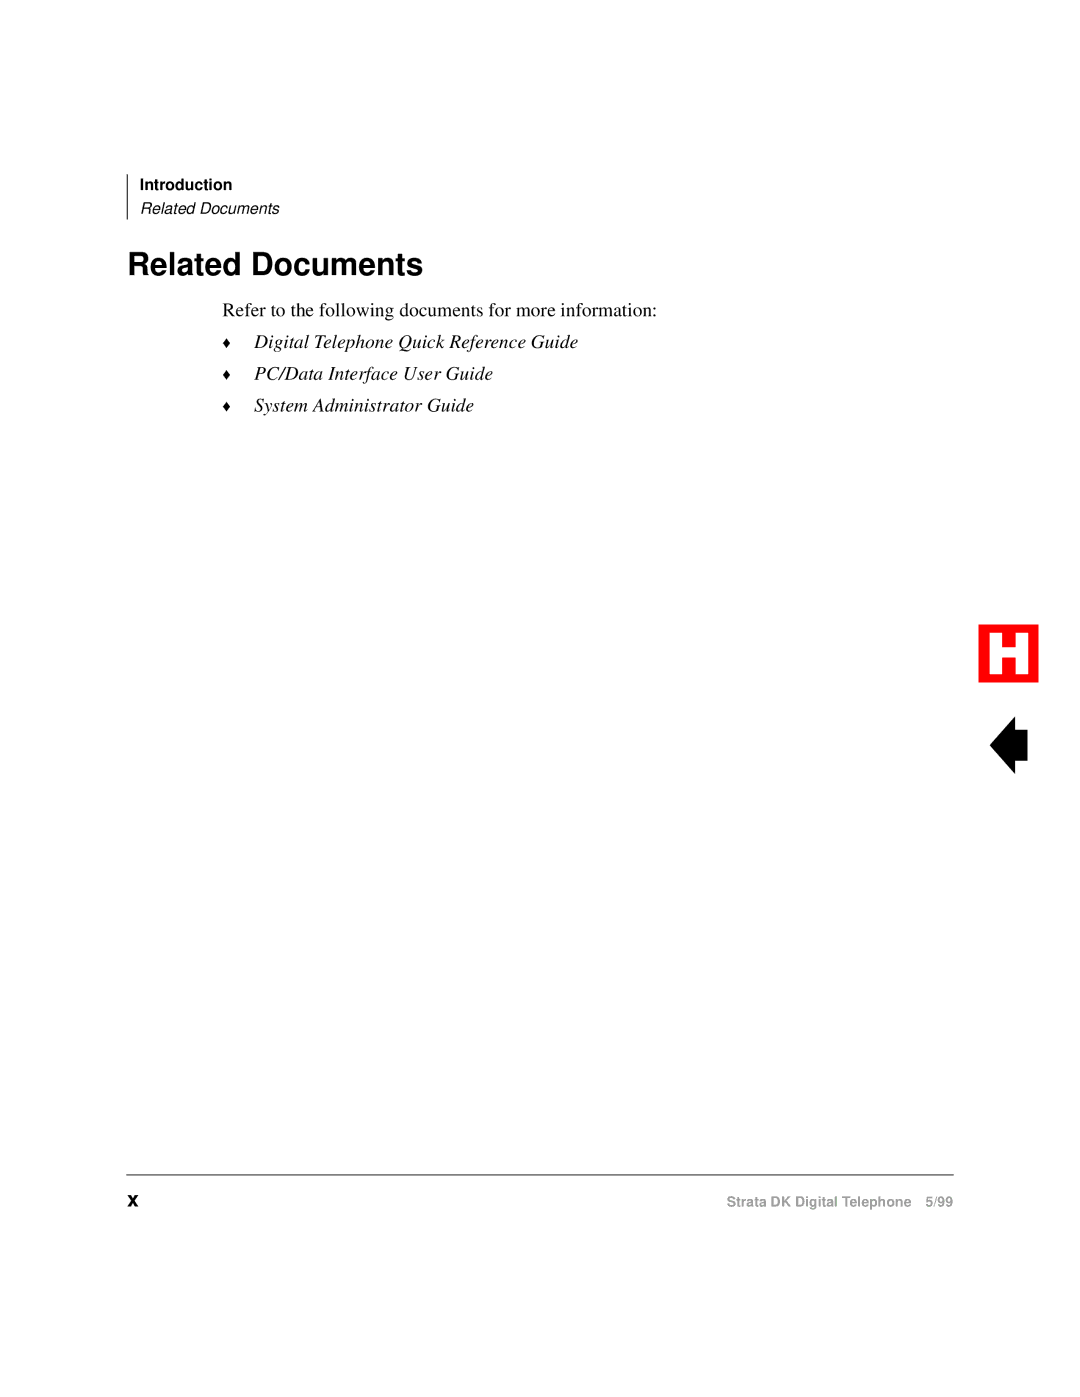 Toshiba Digital Telephone manual Related Documents 